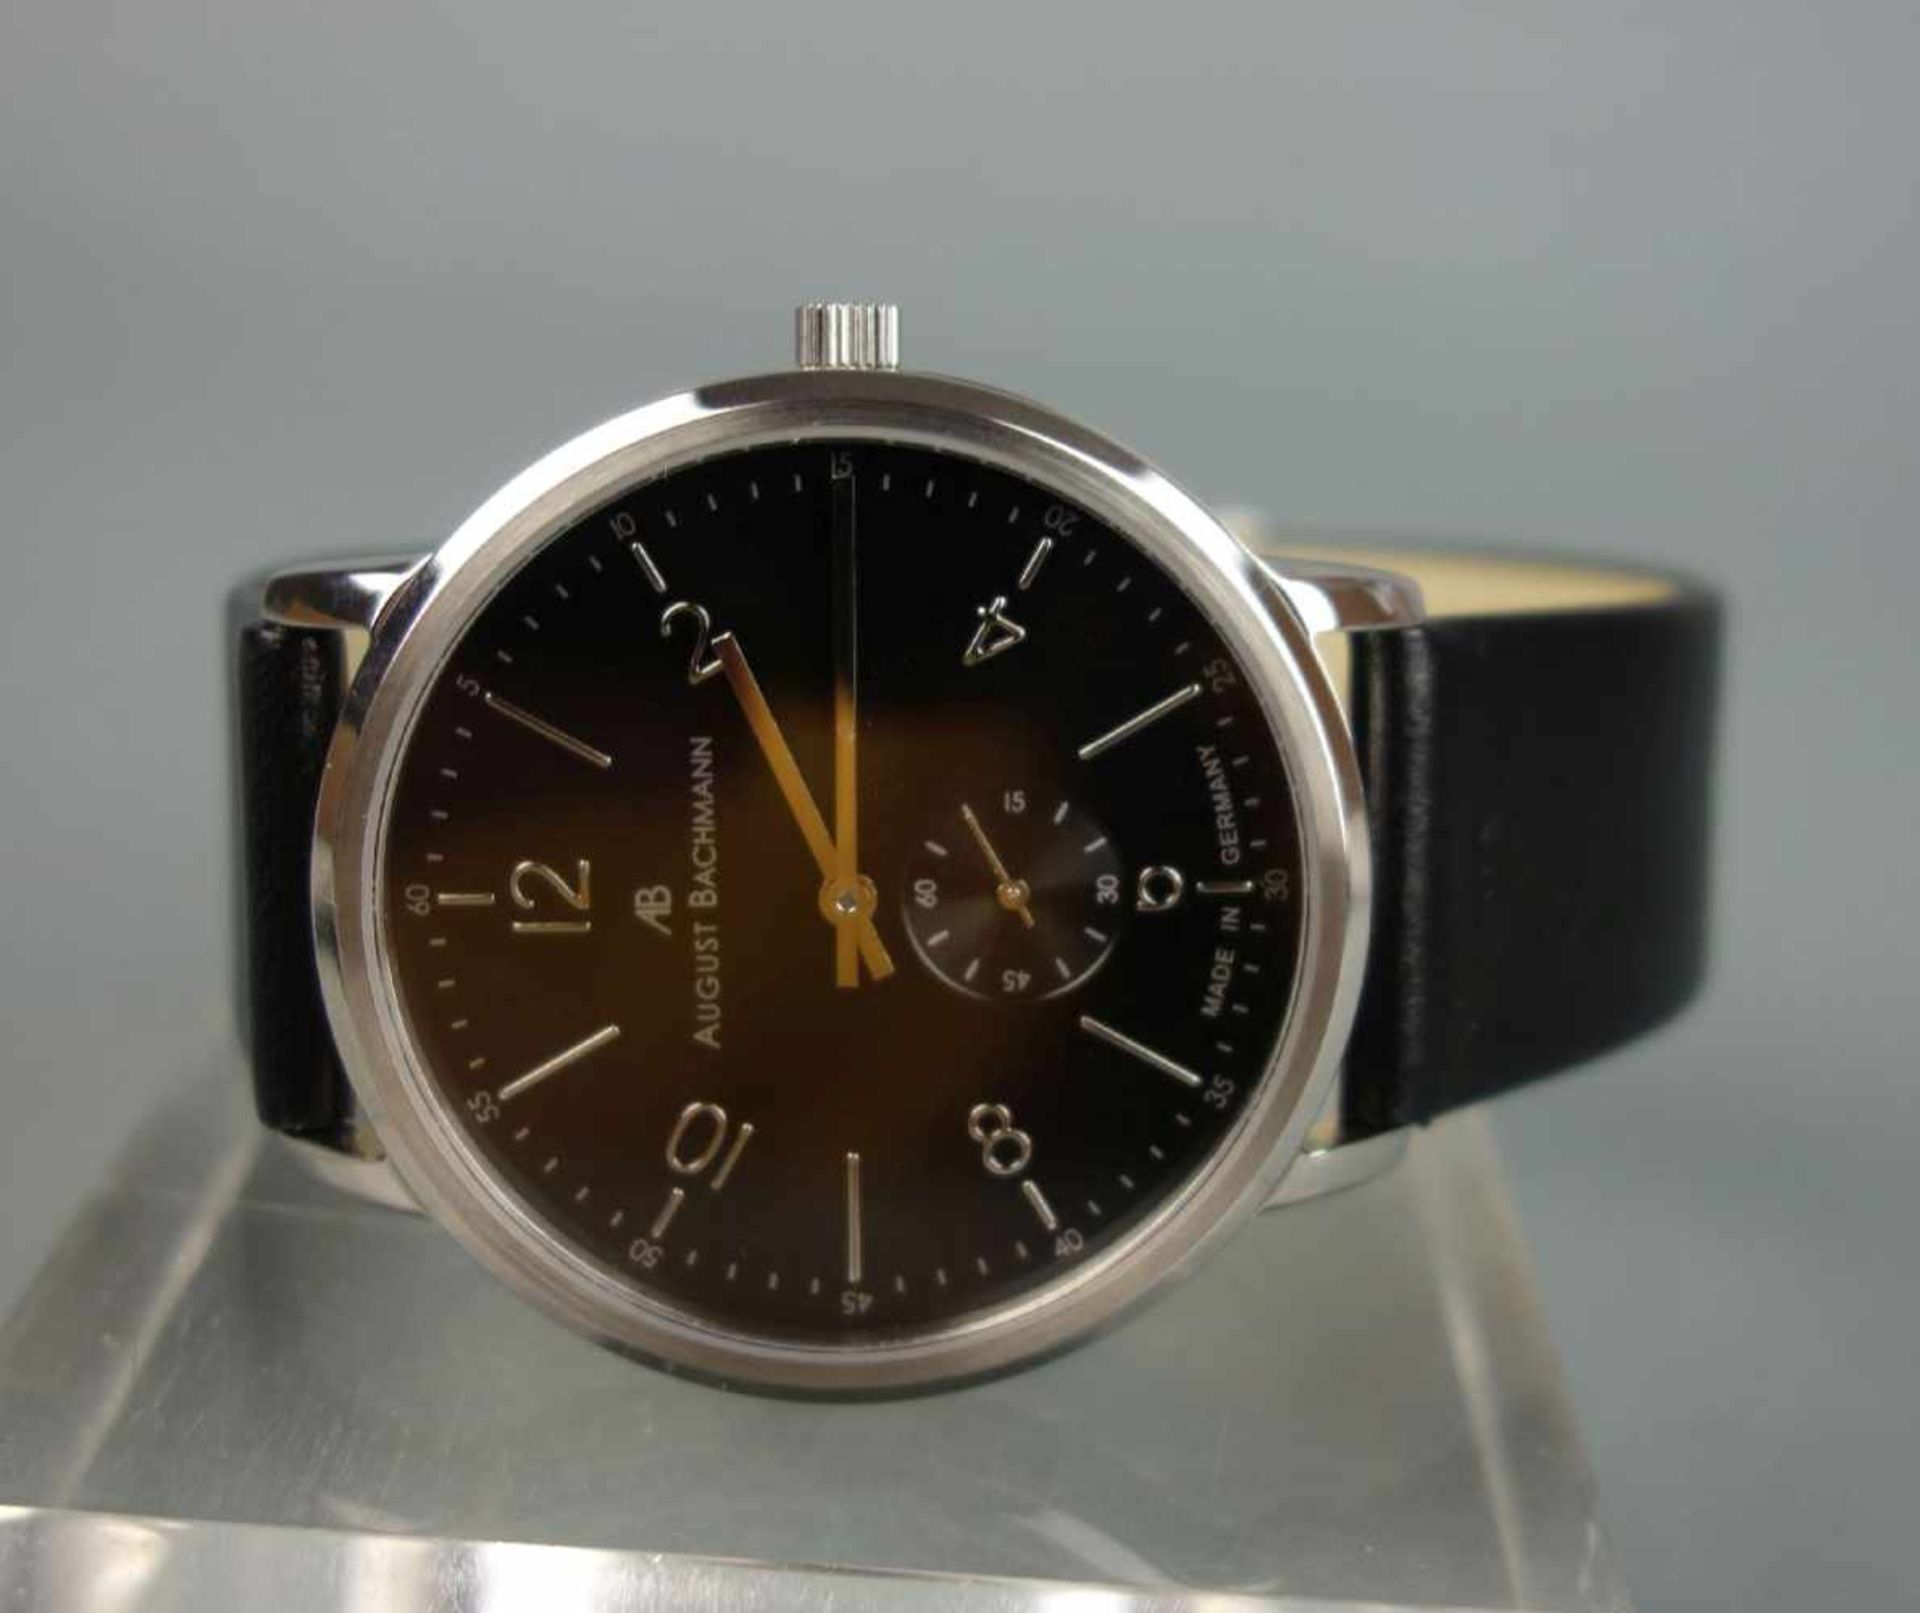 ARMBANDUHR / wristwatch, Quarz-Uhr, Manufaktur August Bachmann / Deutschland. Modell "10101.35. - Image 2 of 4